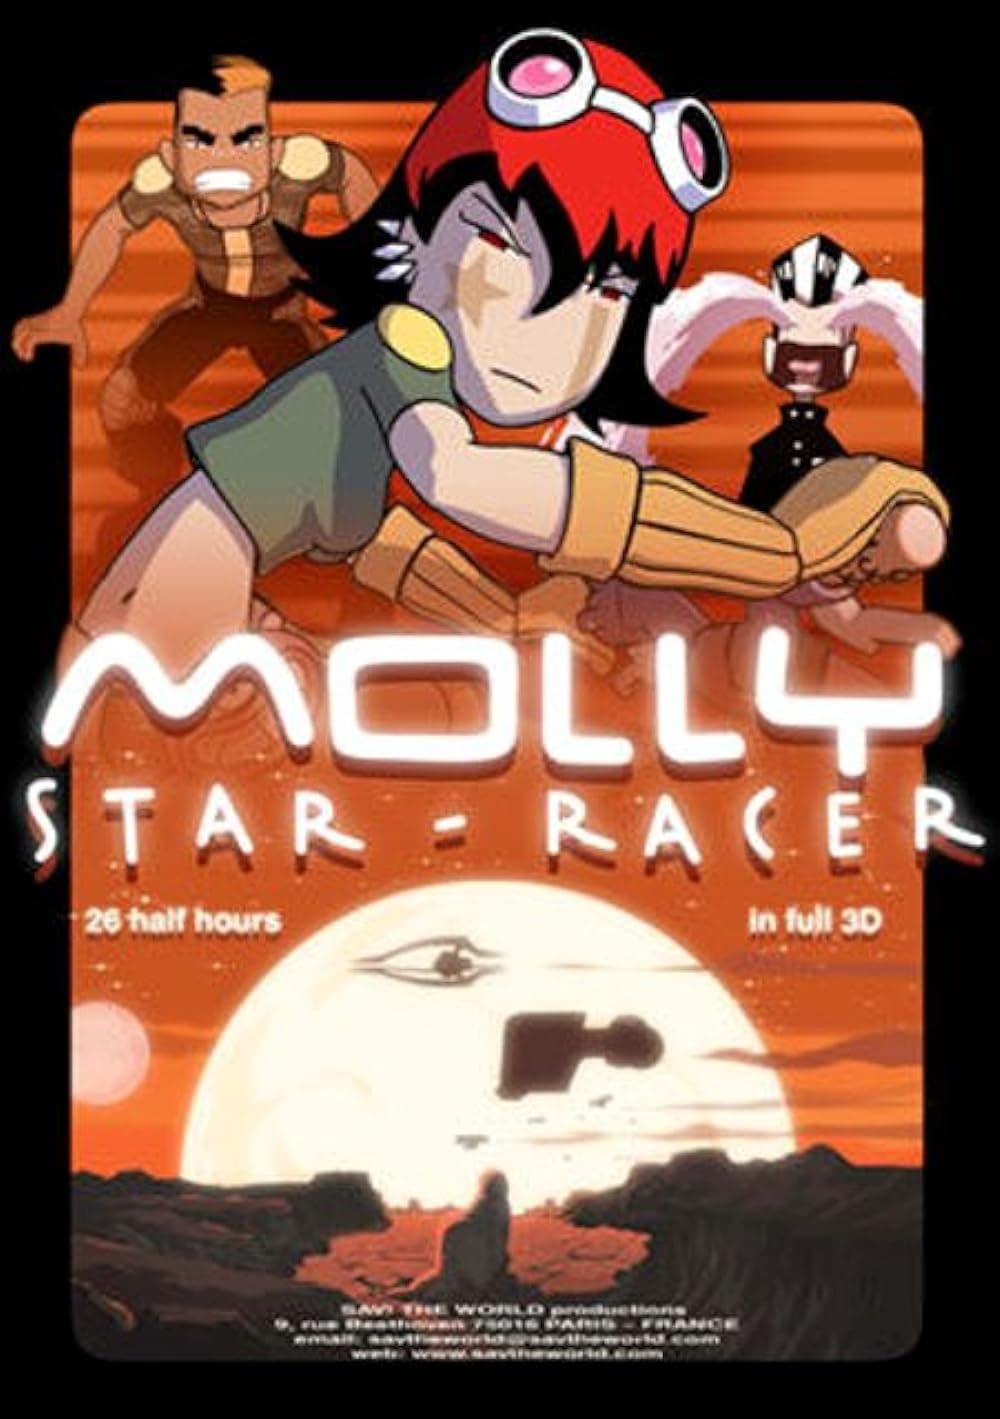 Molly, Star-Racer